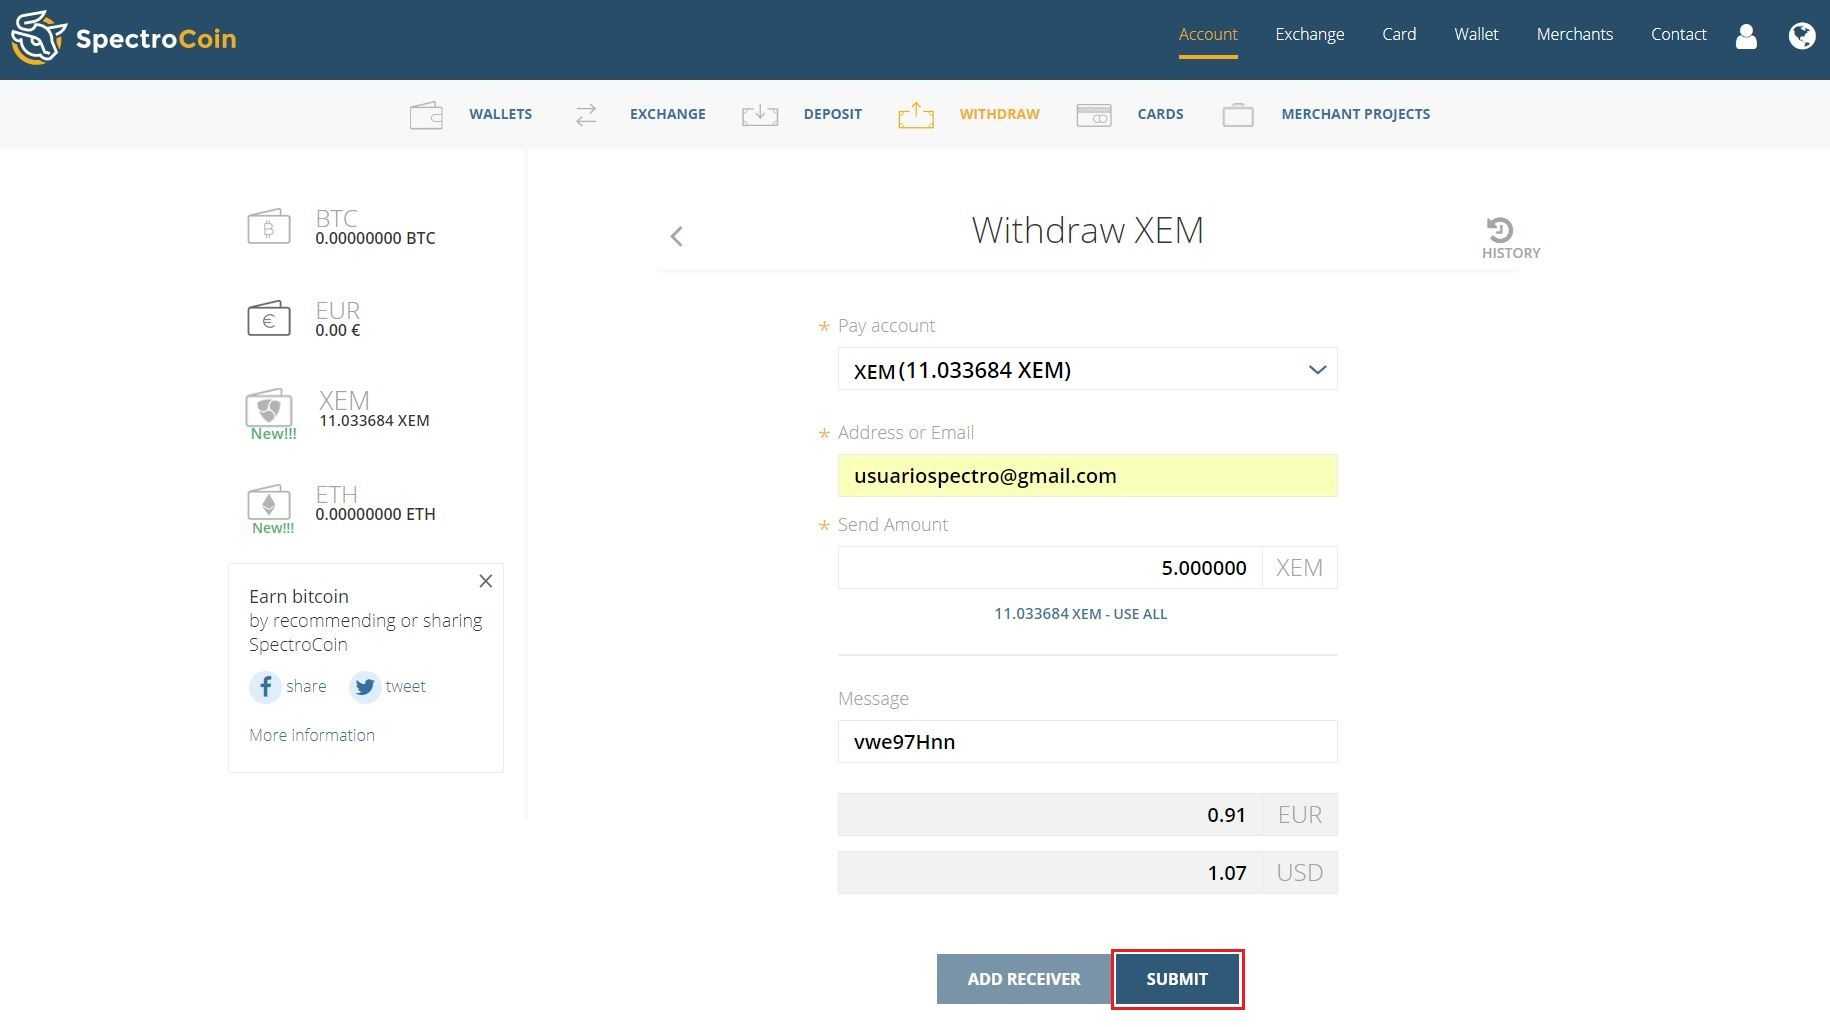 SpectroCoin "withdraw XEM" form